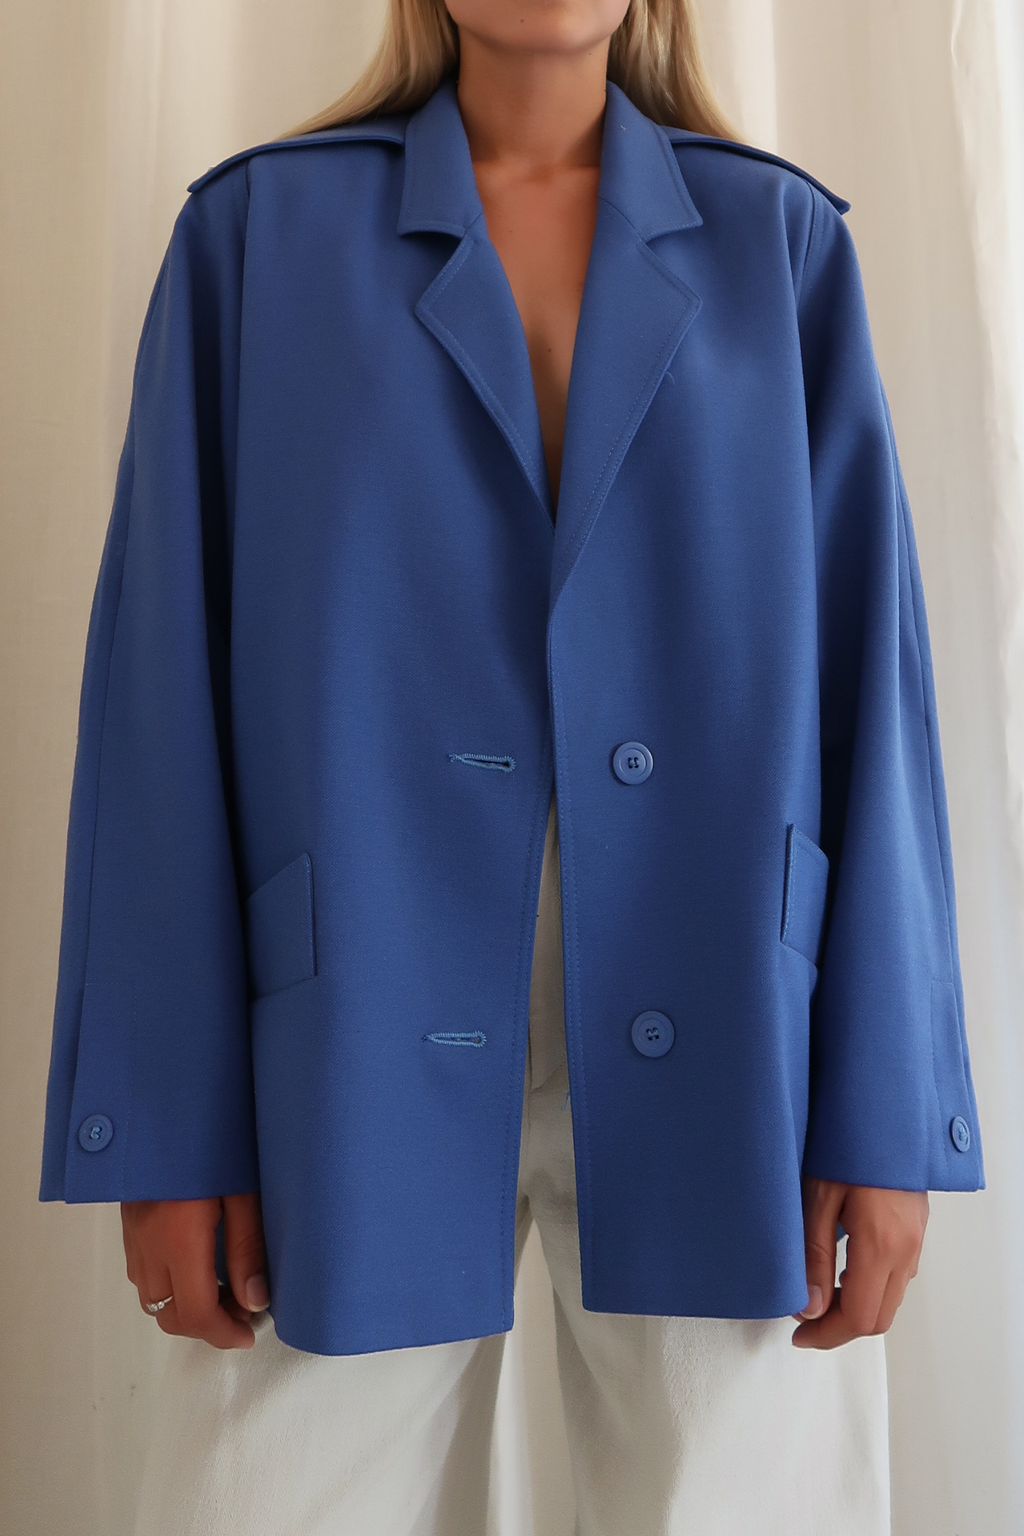 Blue Vintage Wool Jacket